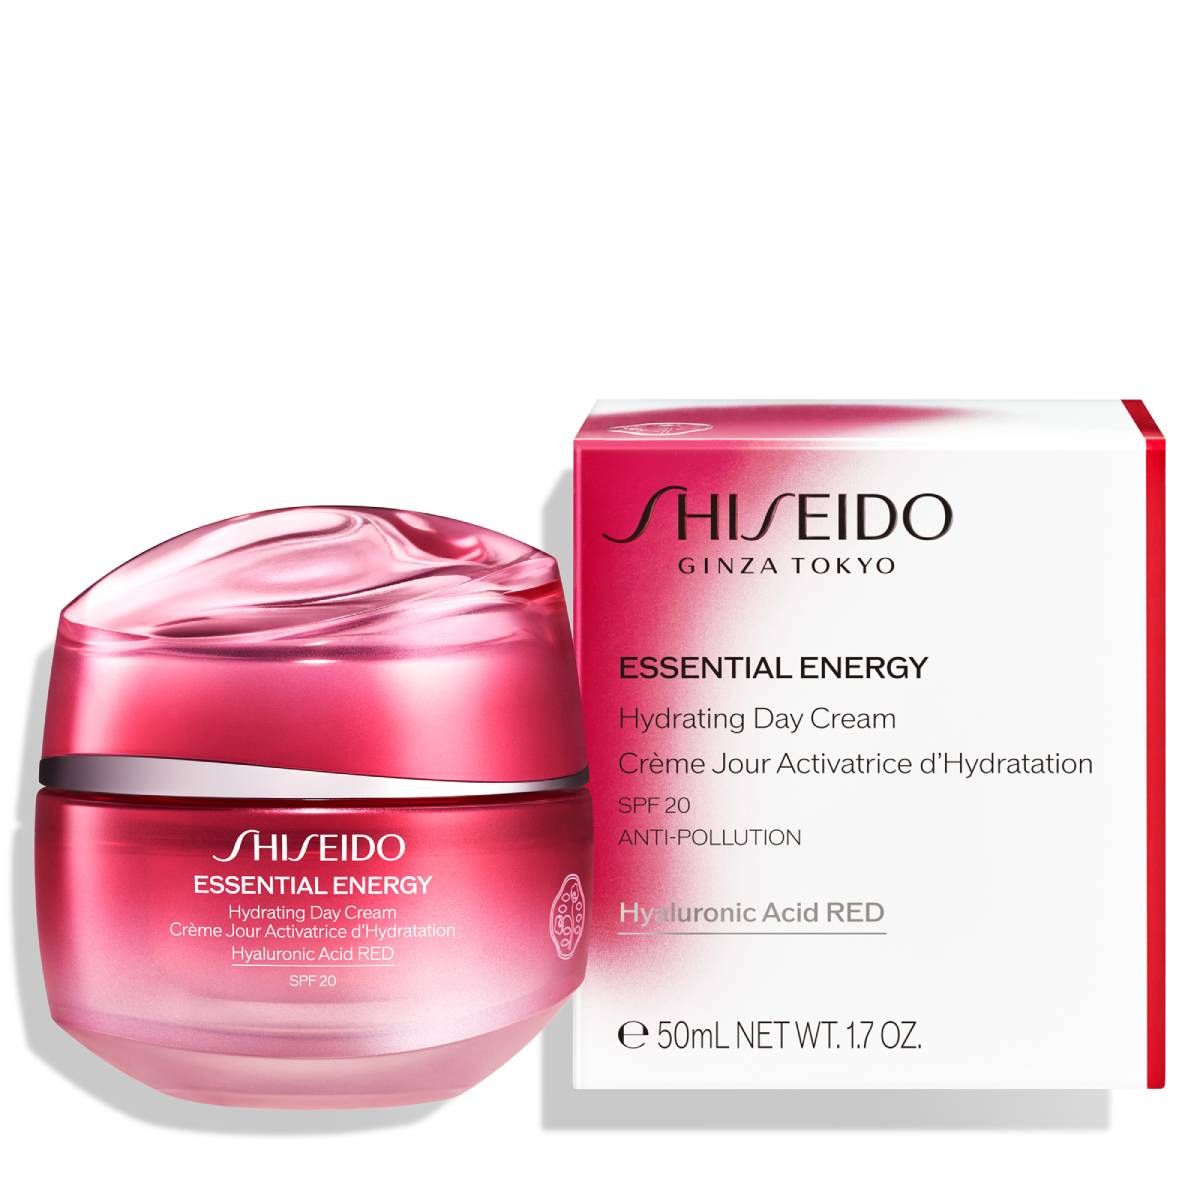 Essential Energy Hydrating Day Cream SPF 20 de Shiseido